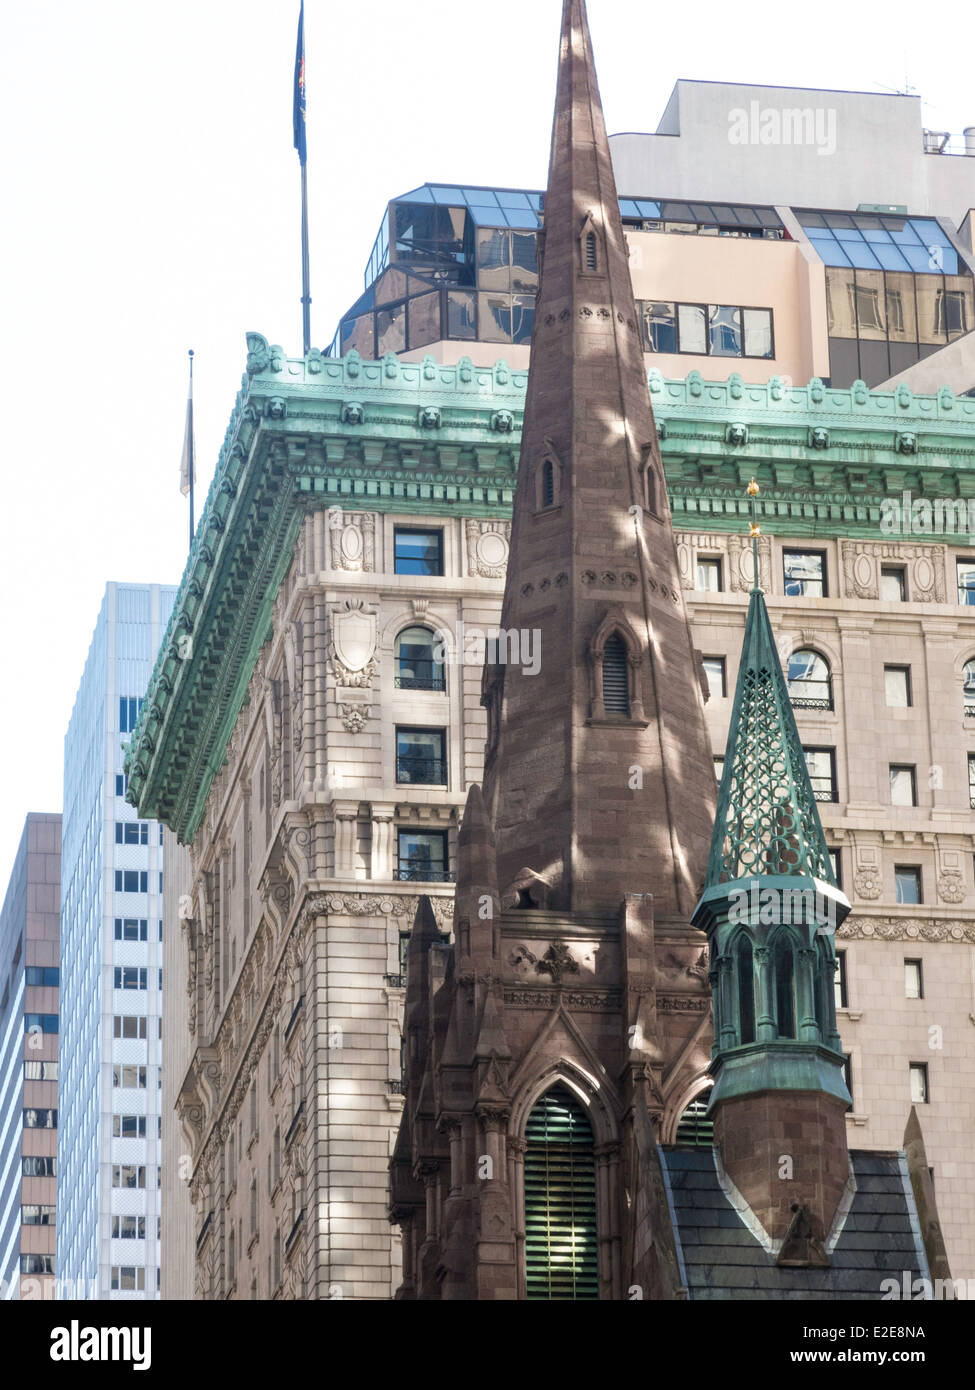 Fifth Avenue Presbyterian Church (FAPC) Spire and The Peninsula Hotel, Fifth Avenue, NYC, USA Stock Photo